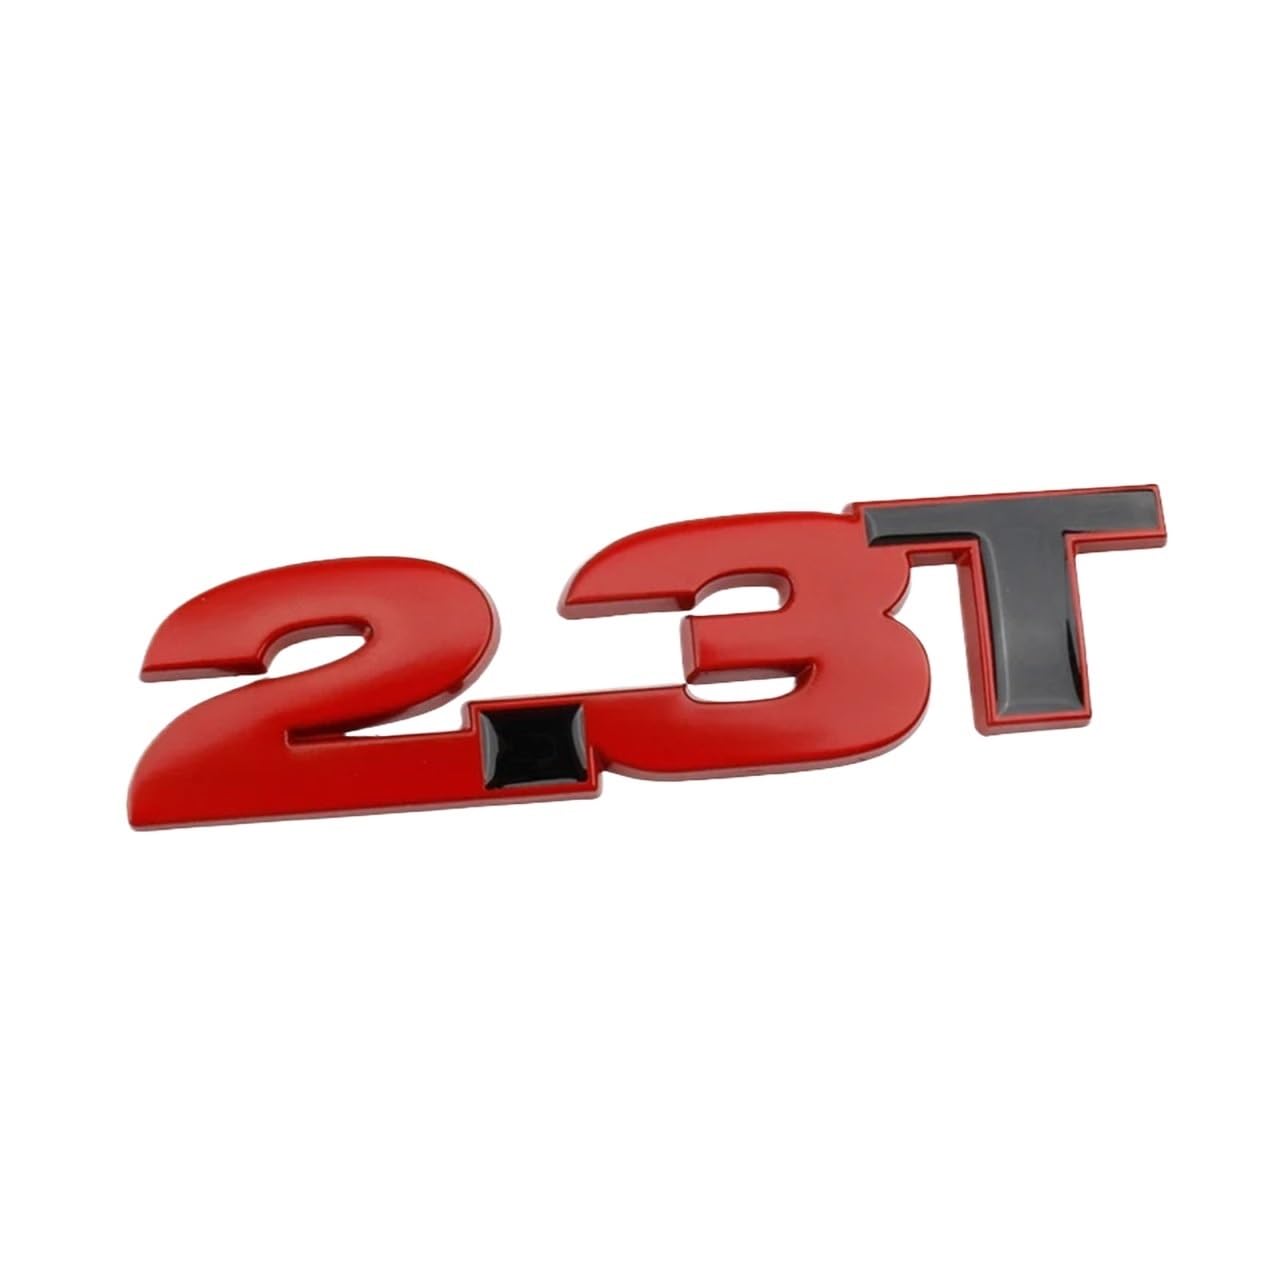 3D Metall 2.3T Auto Hubraum Aufkleber Aufkleber GT Shelby 2.3T Logo Auto Kofferraum Körper Abzeichen Emblem Styling Aufkleber(C) von NRUOS